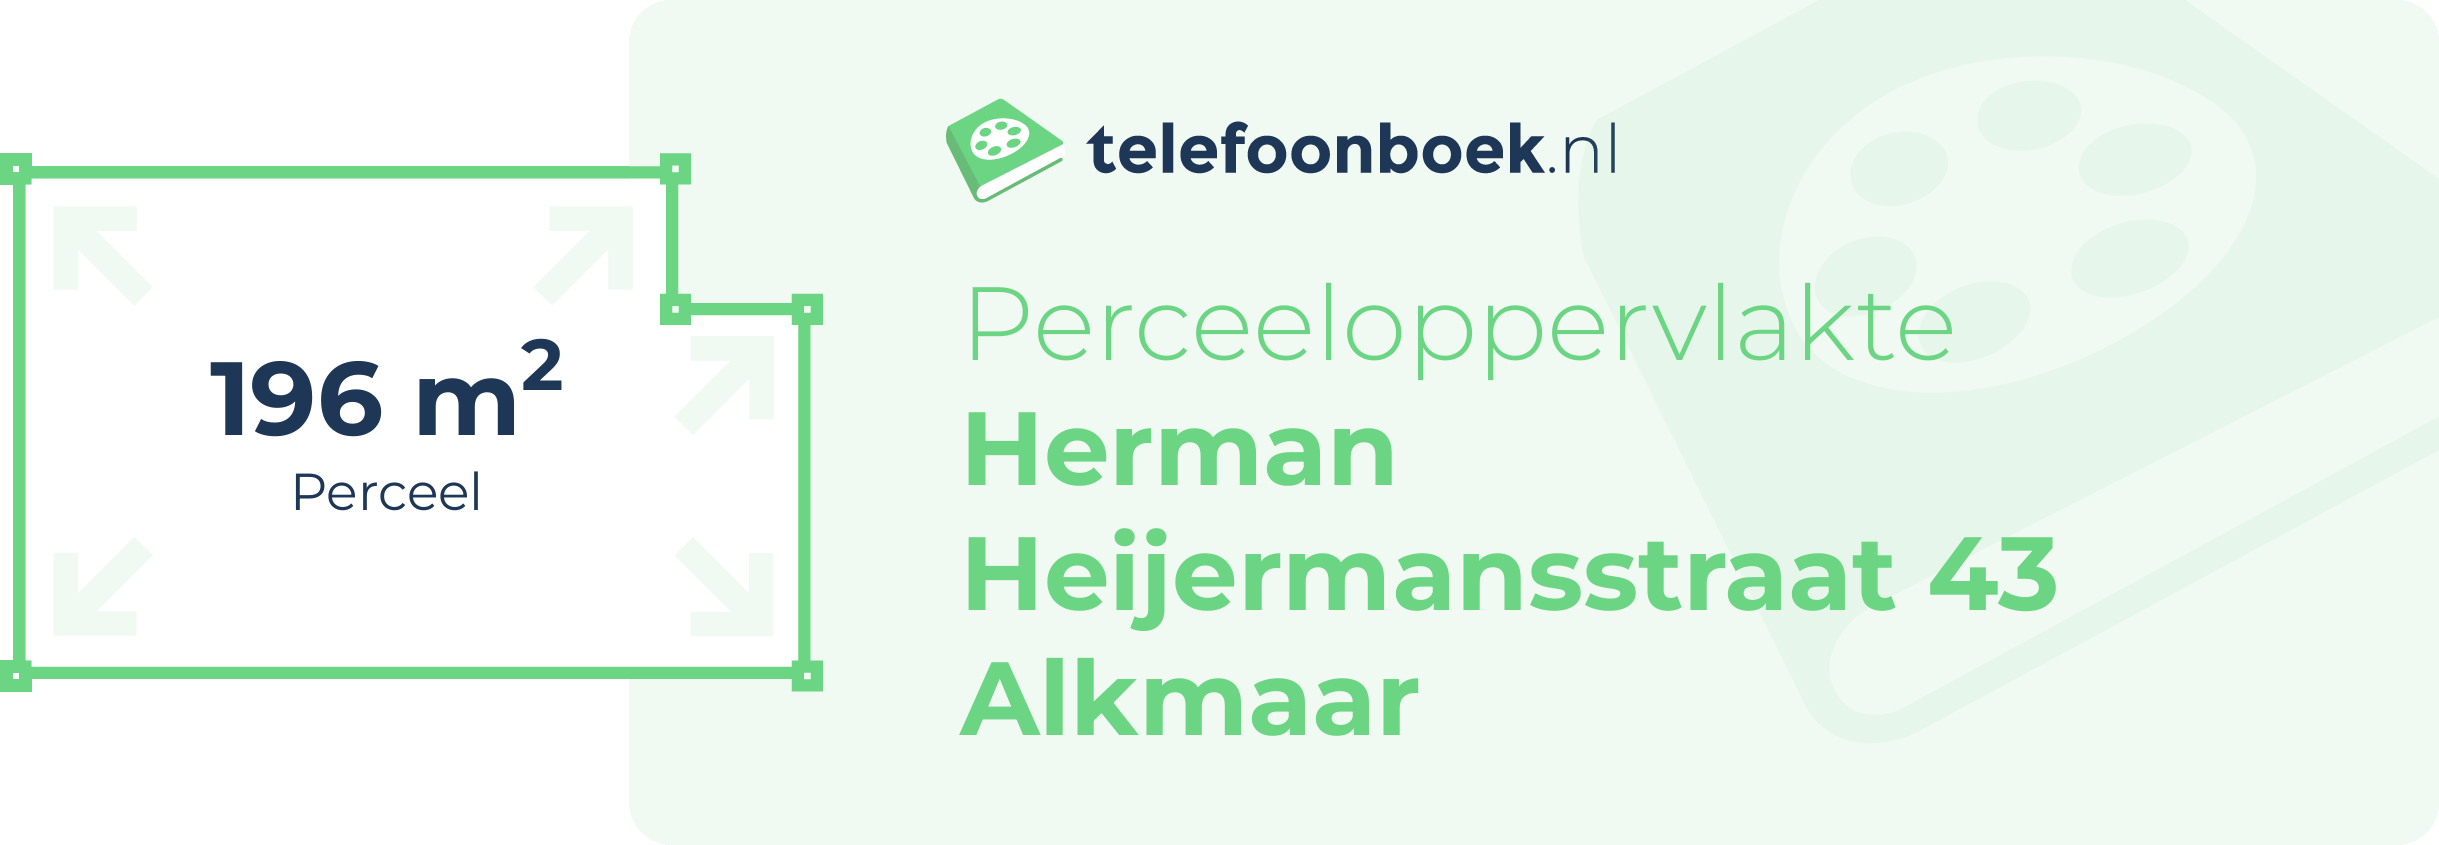 Perceeloppervlakte Herman Heijermansstraat 43 Alkmaar